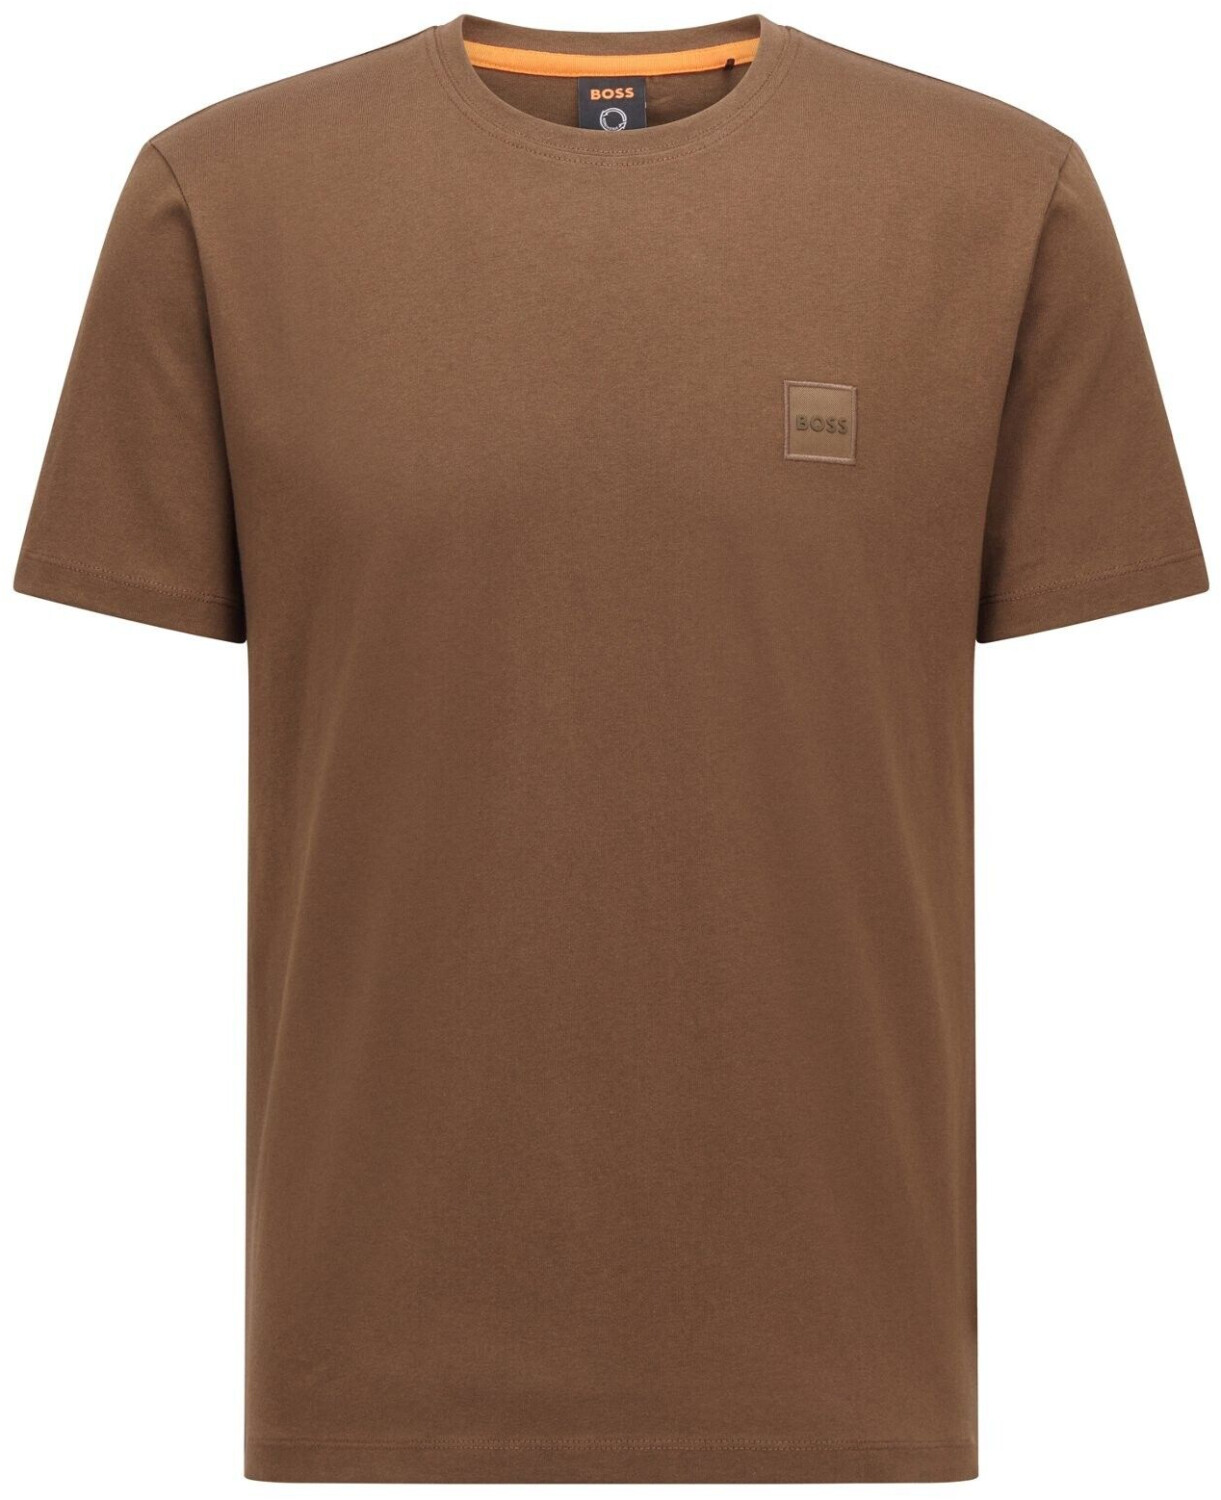 Hugo Boss Tales T-Shirt bei 34,99 ab € dark Preisvergleich (50472584) | green